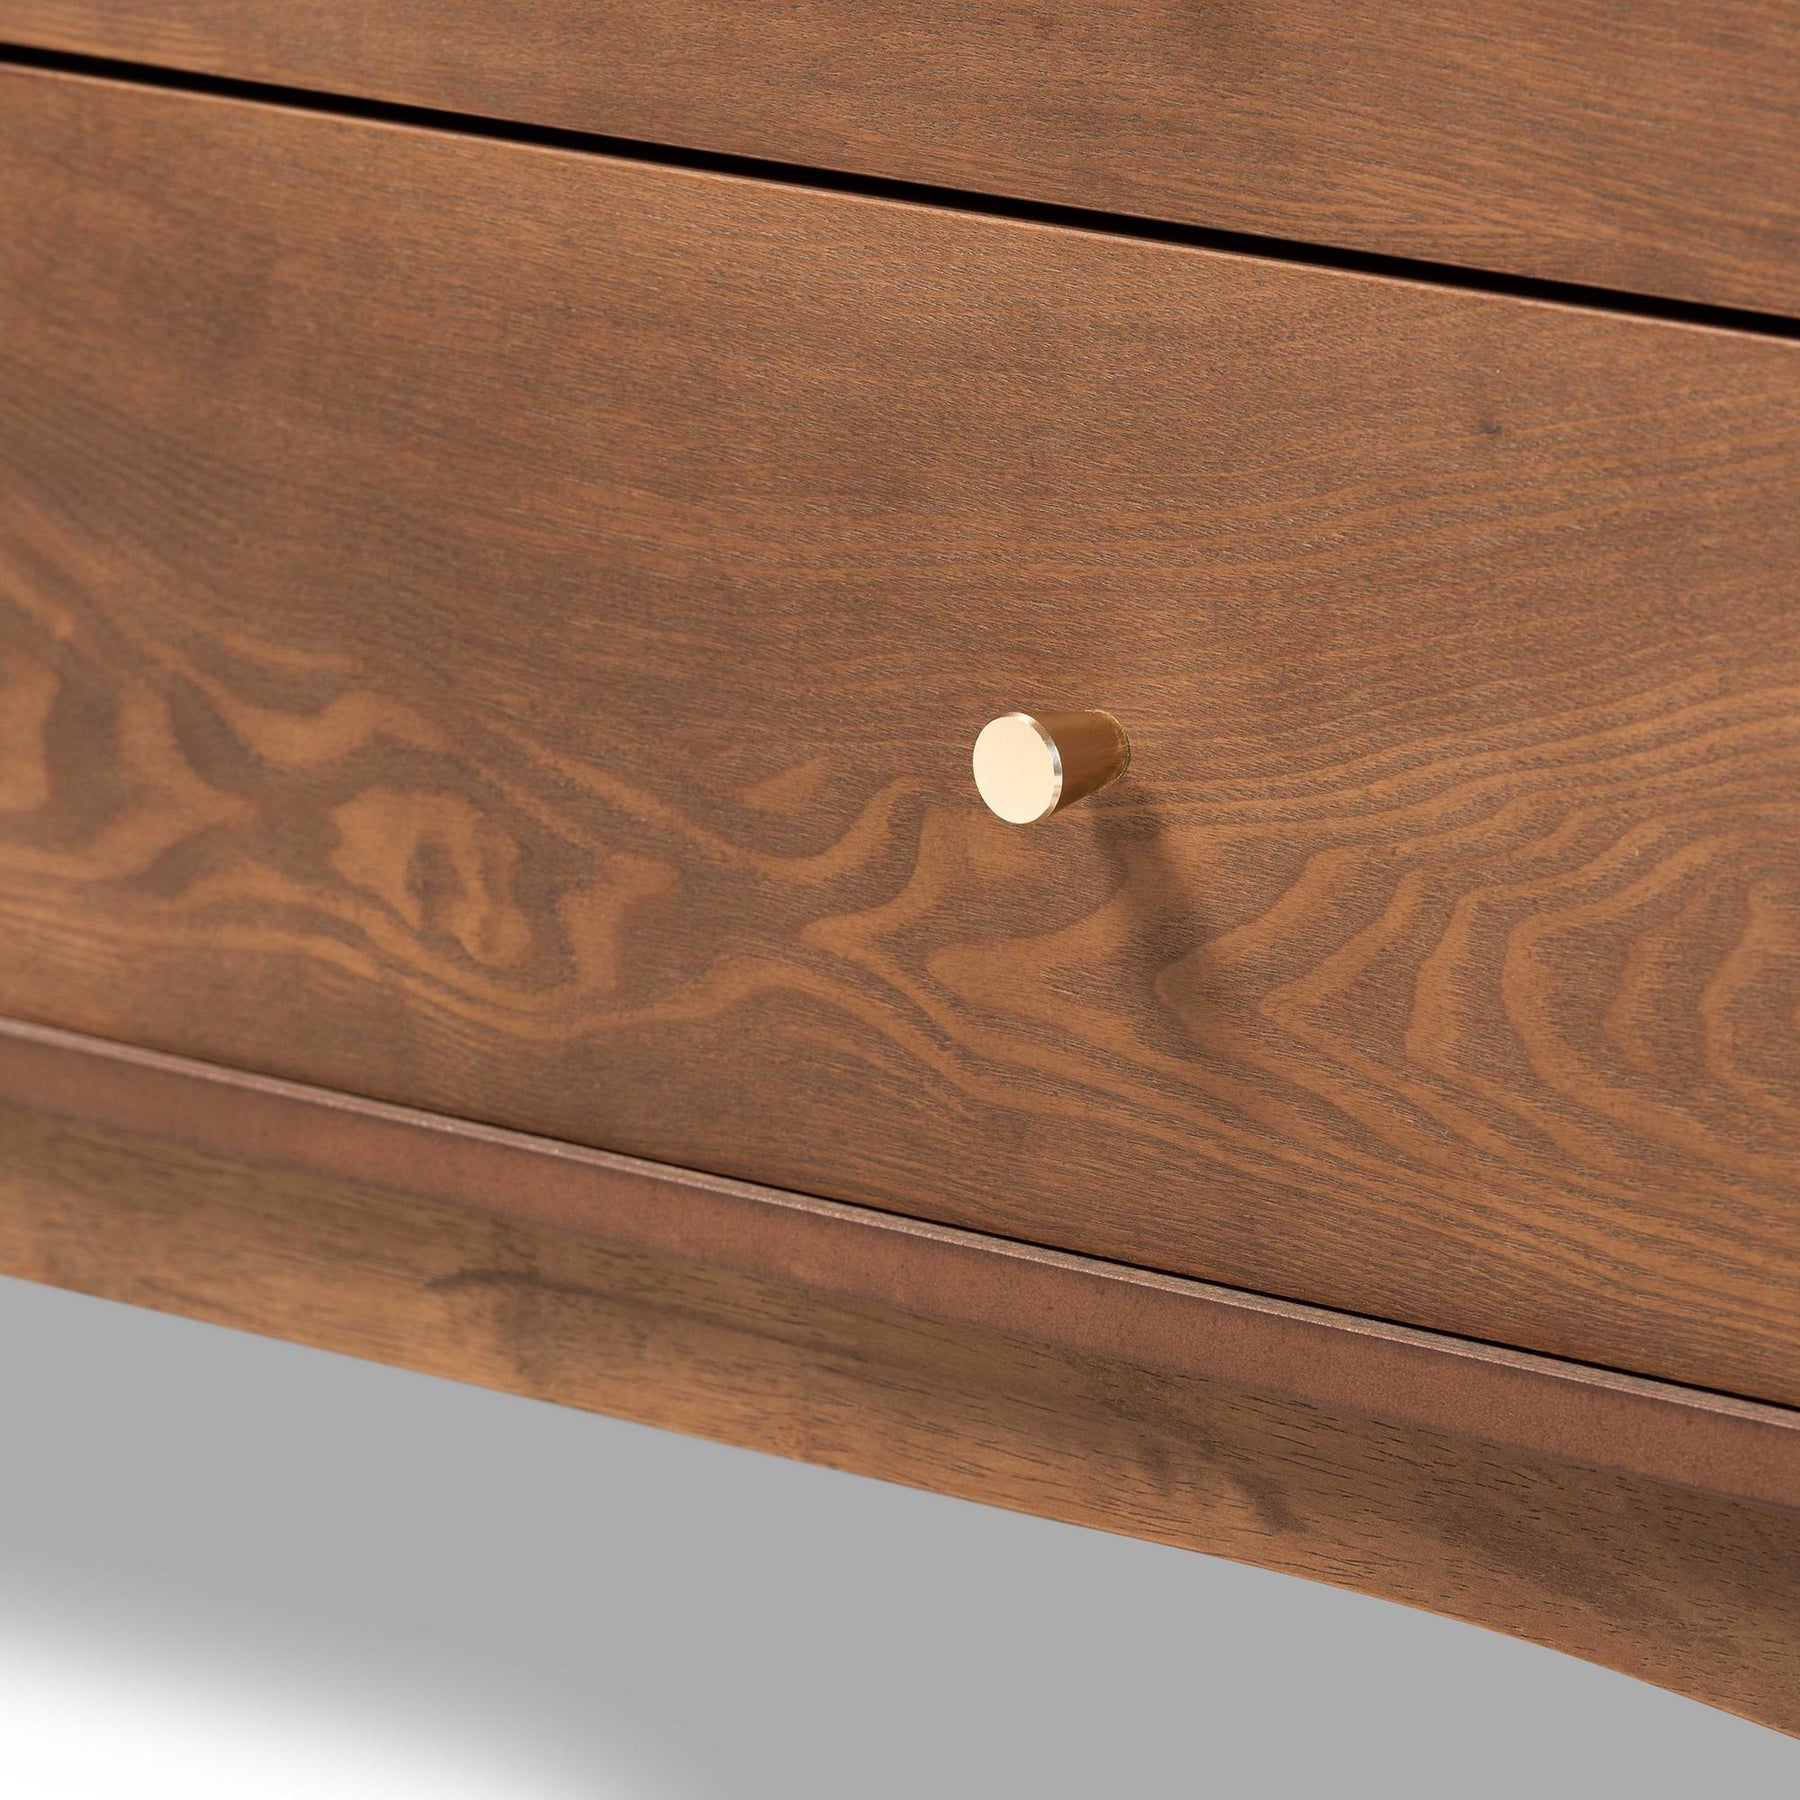 Baxton Studio Landis Mid-Century Modern Ash Walnut Finished Wood 6-Drawer Dresser - MG9002-Ash Walnut-6DW-Dresser